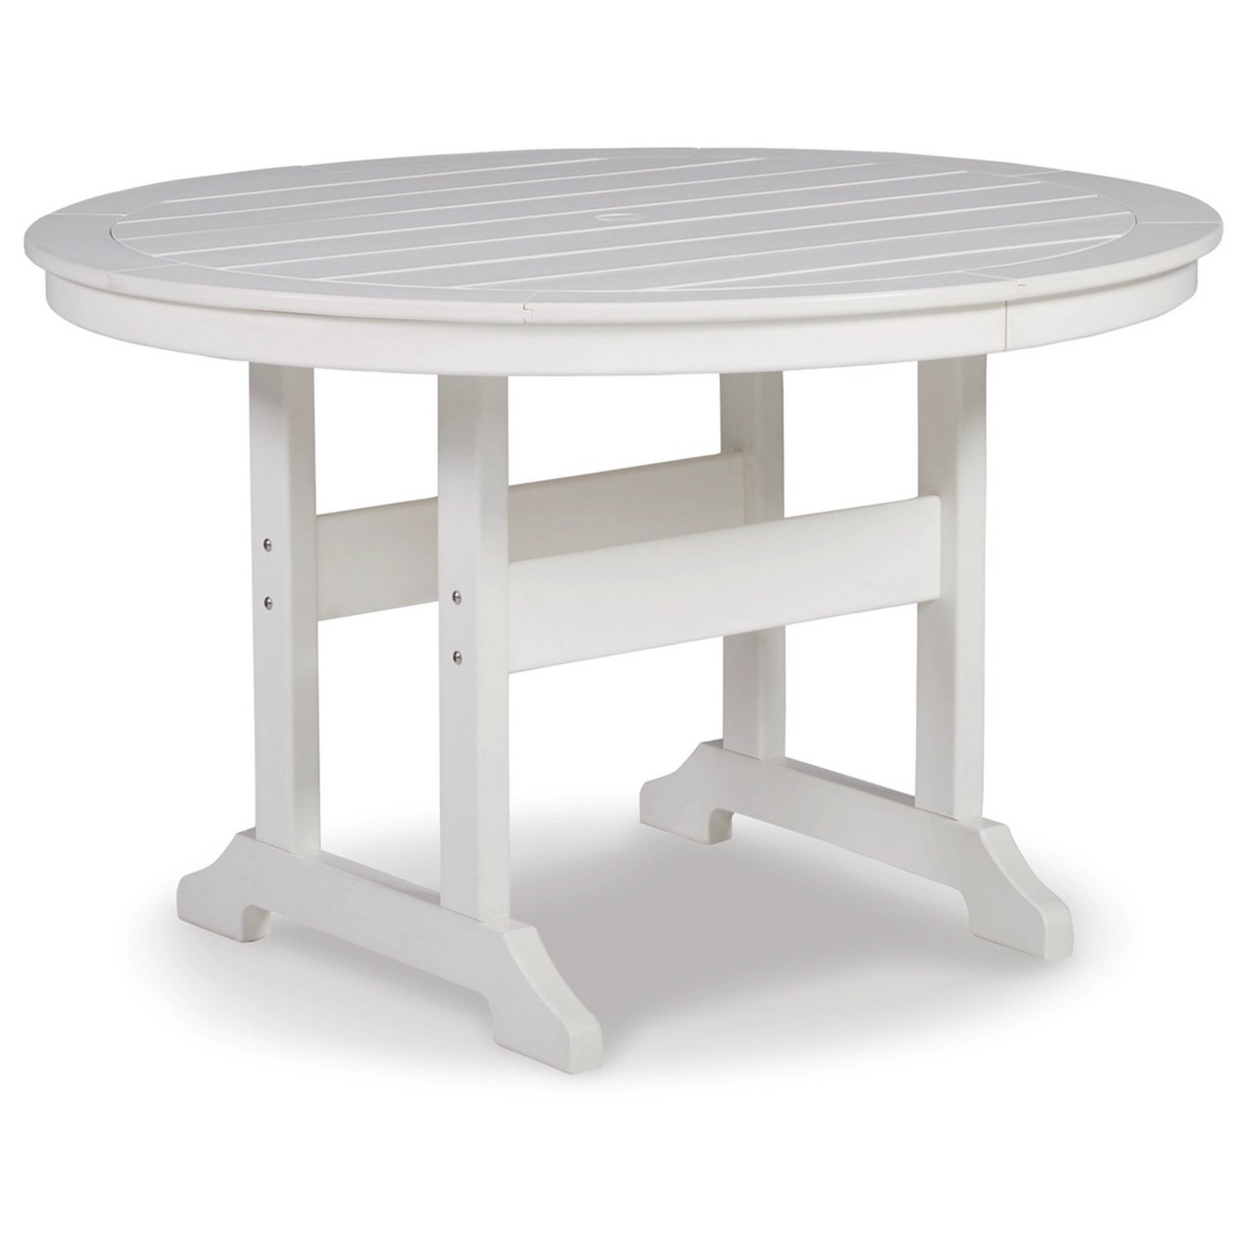 48 Inch Round Dining Table With Trestle Legs, Umbrella Hole, White Finish- Saltoro Sherpi